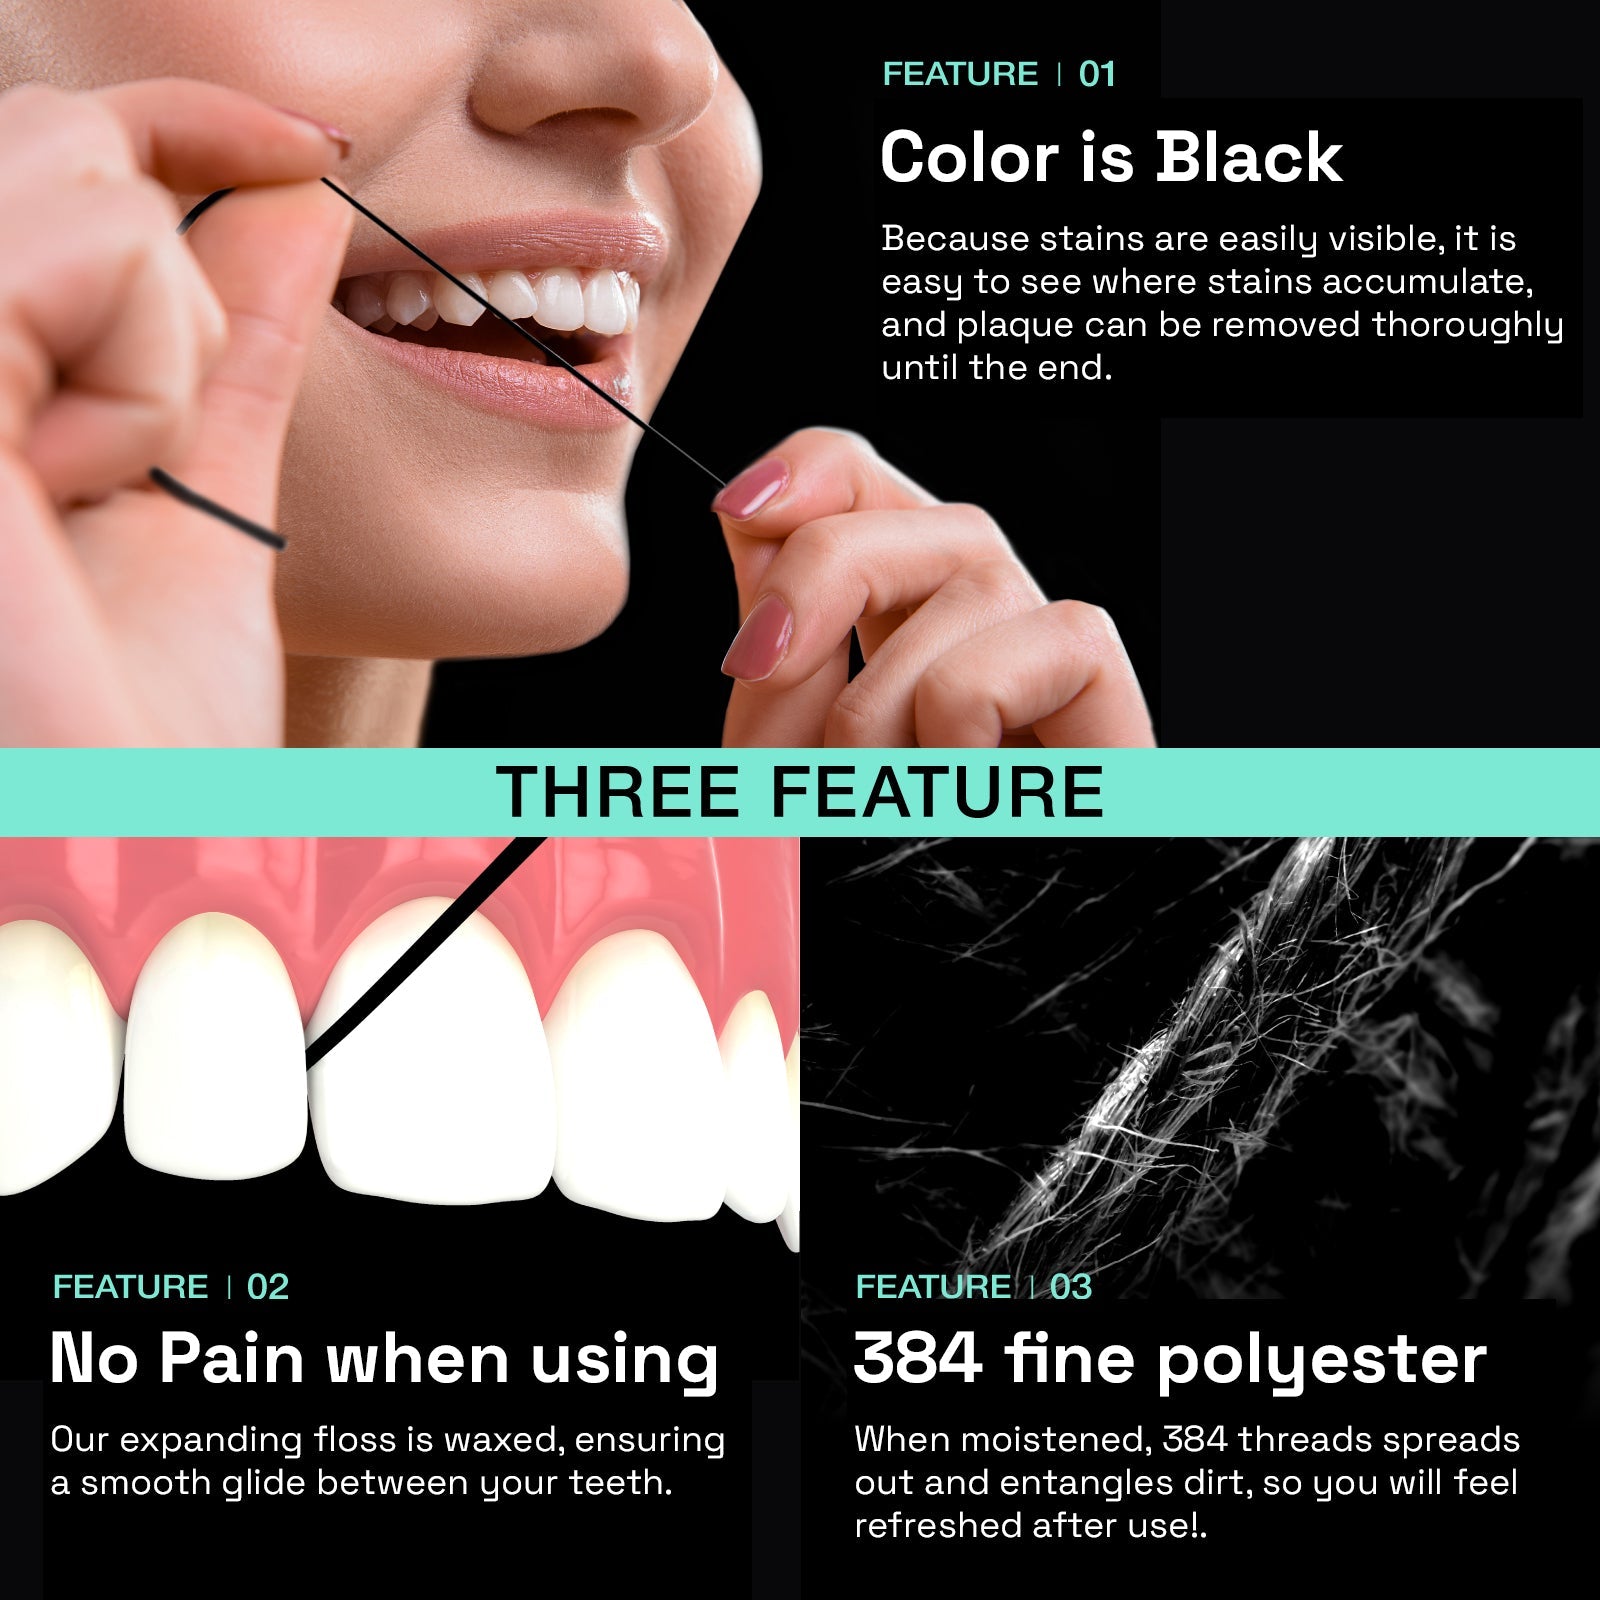 Brushmo Black Floss, Expanding Dental Floss, 110 YD, 2pk